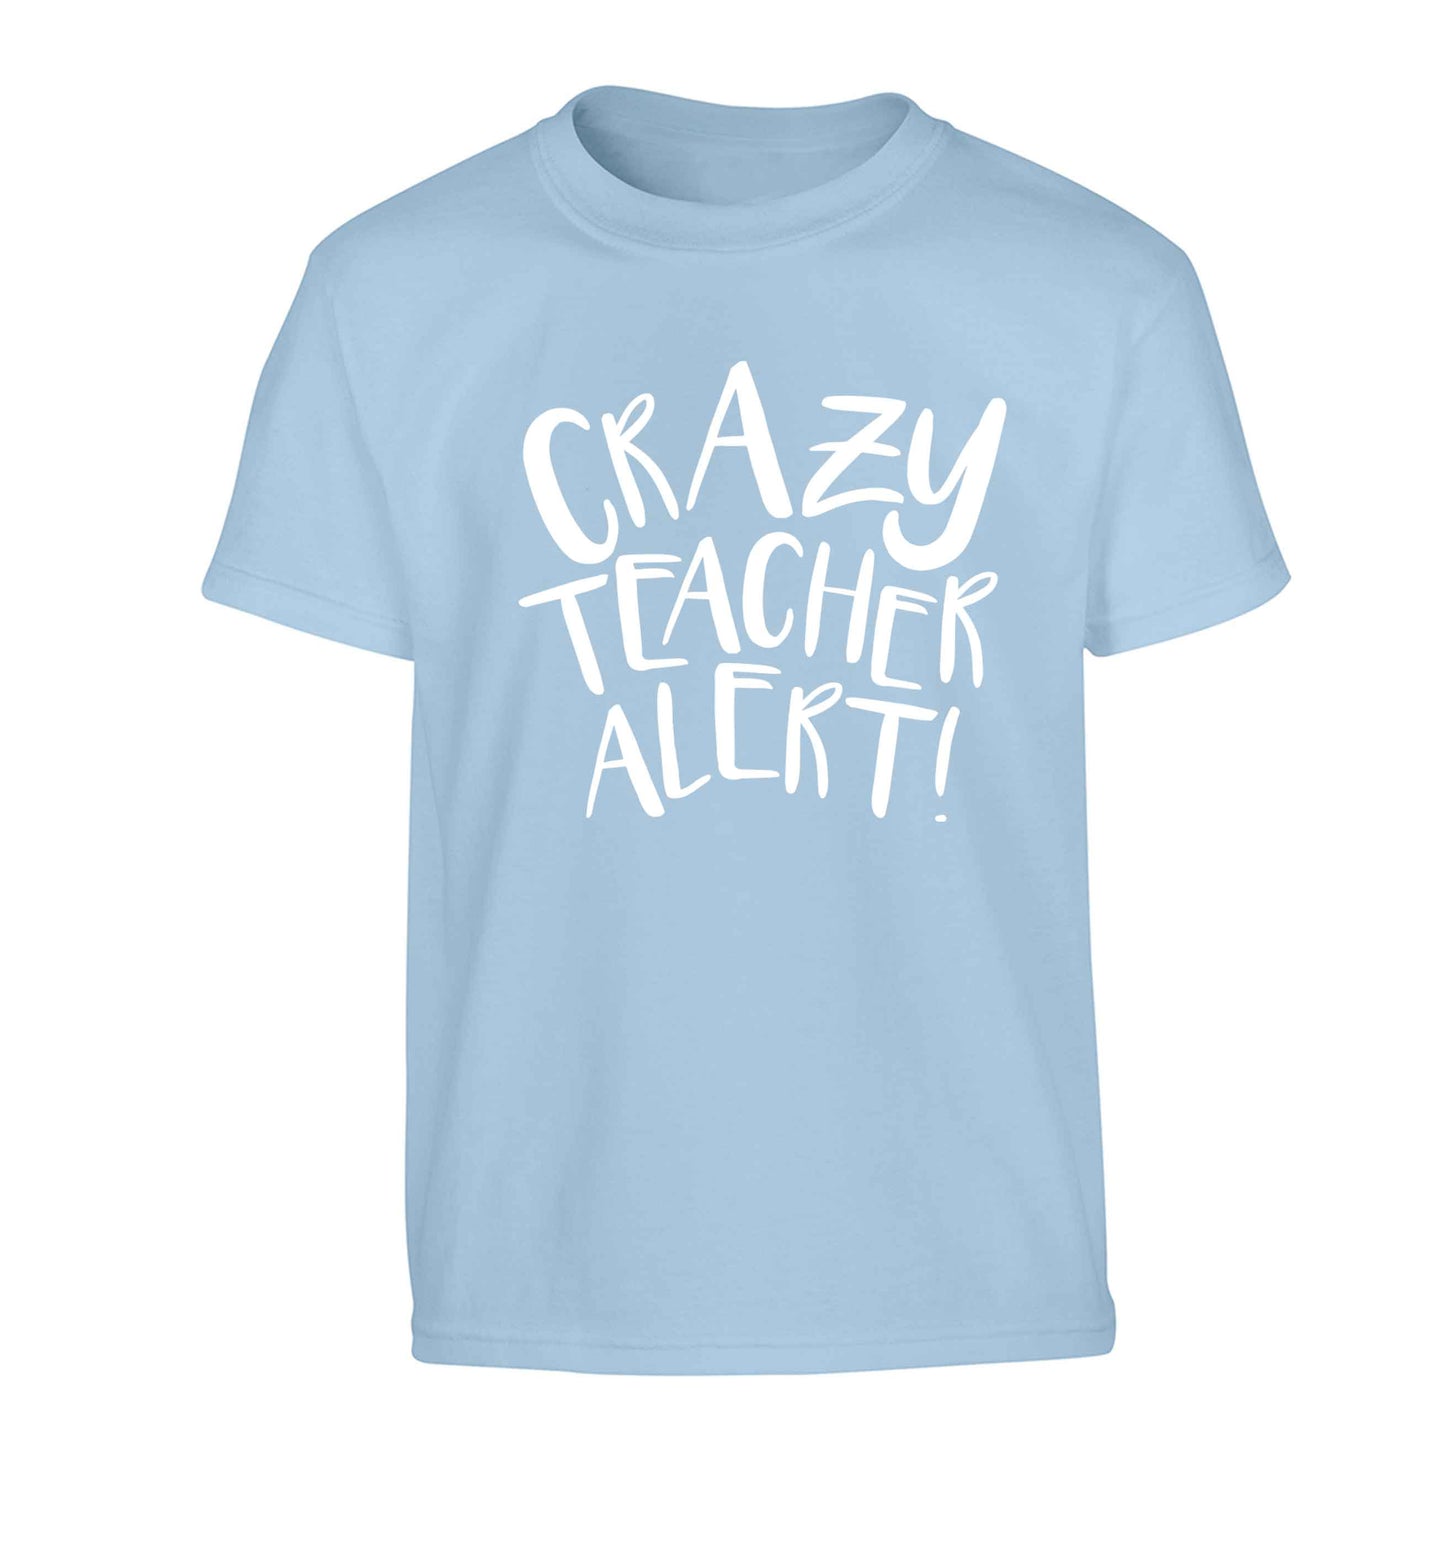 Crazy teacher alert Children's light blue Tshirt 12-13 Years